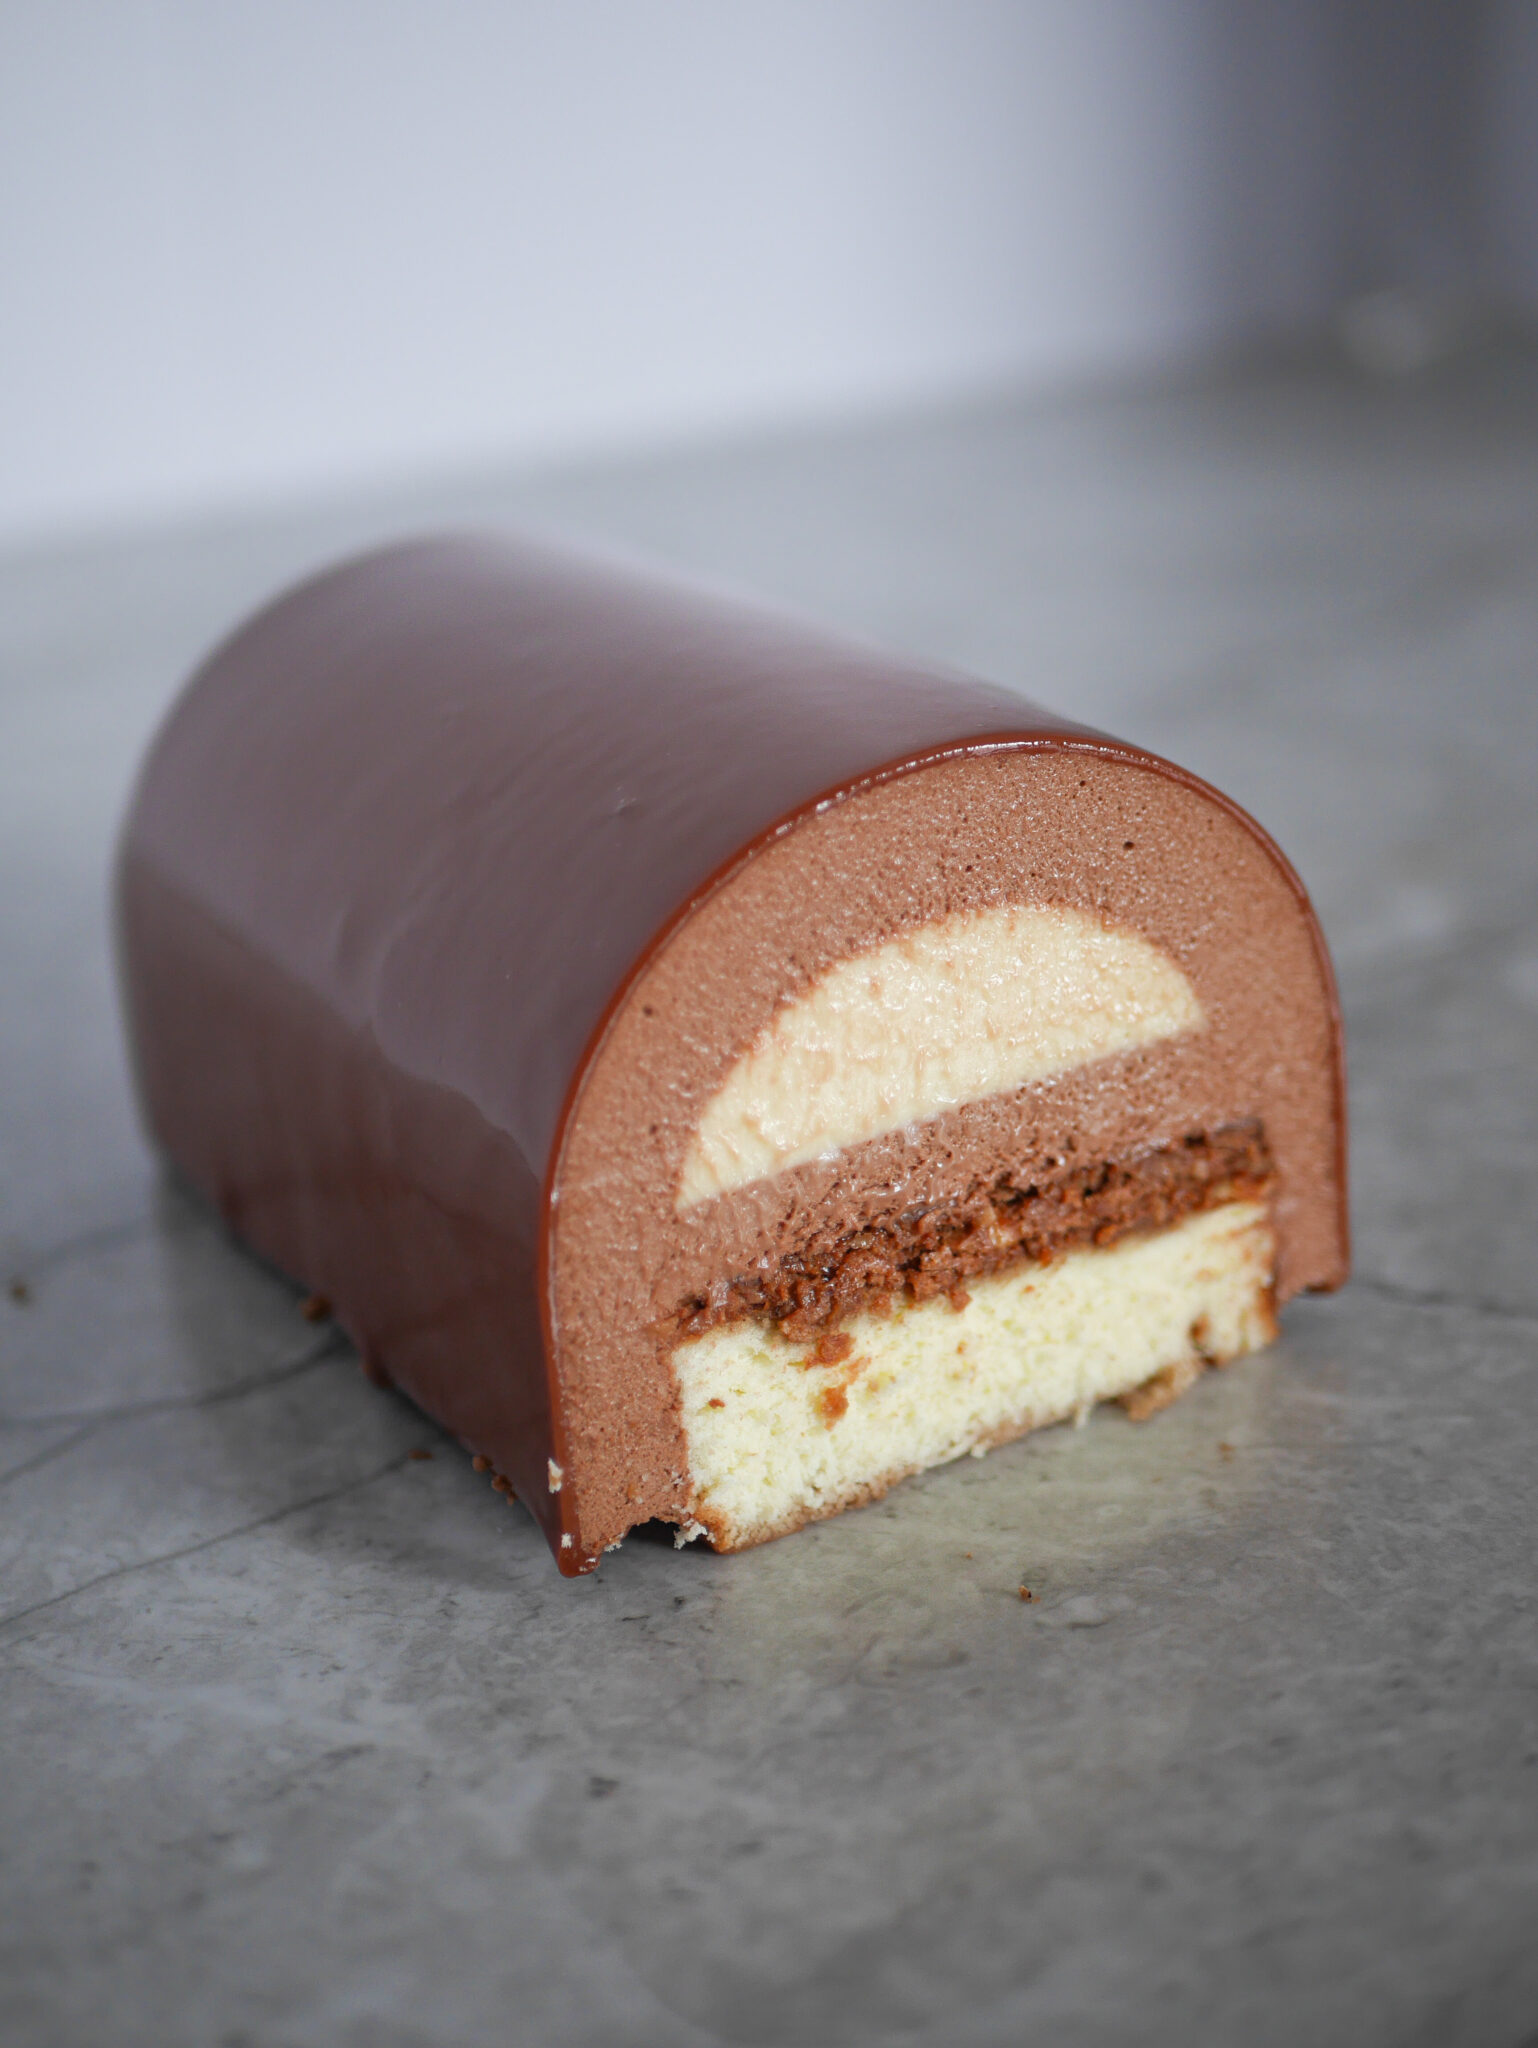 Macadamia and milk chocolate Yule log cake (Bûche de Noël) – The Pastry ...